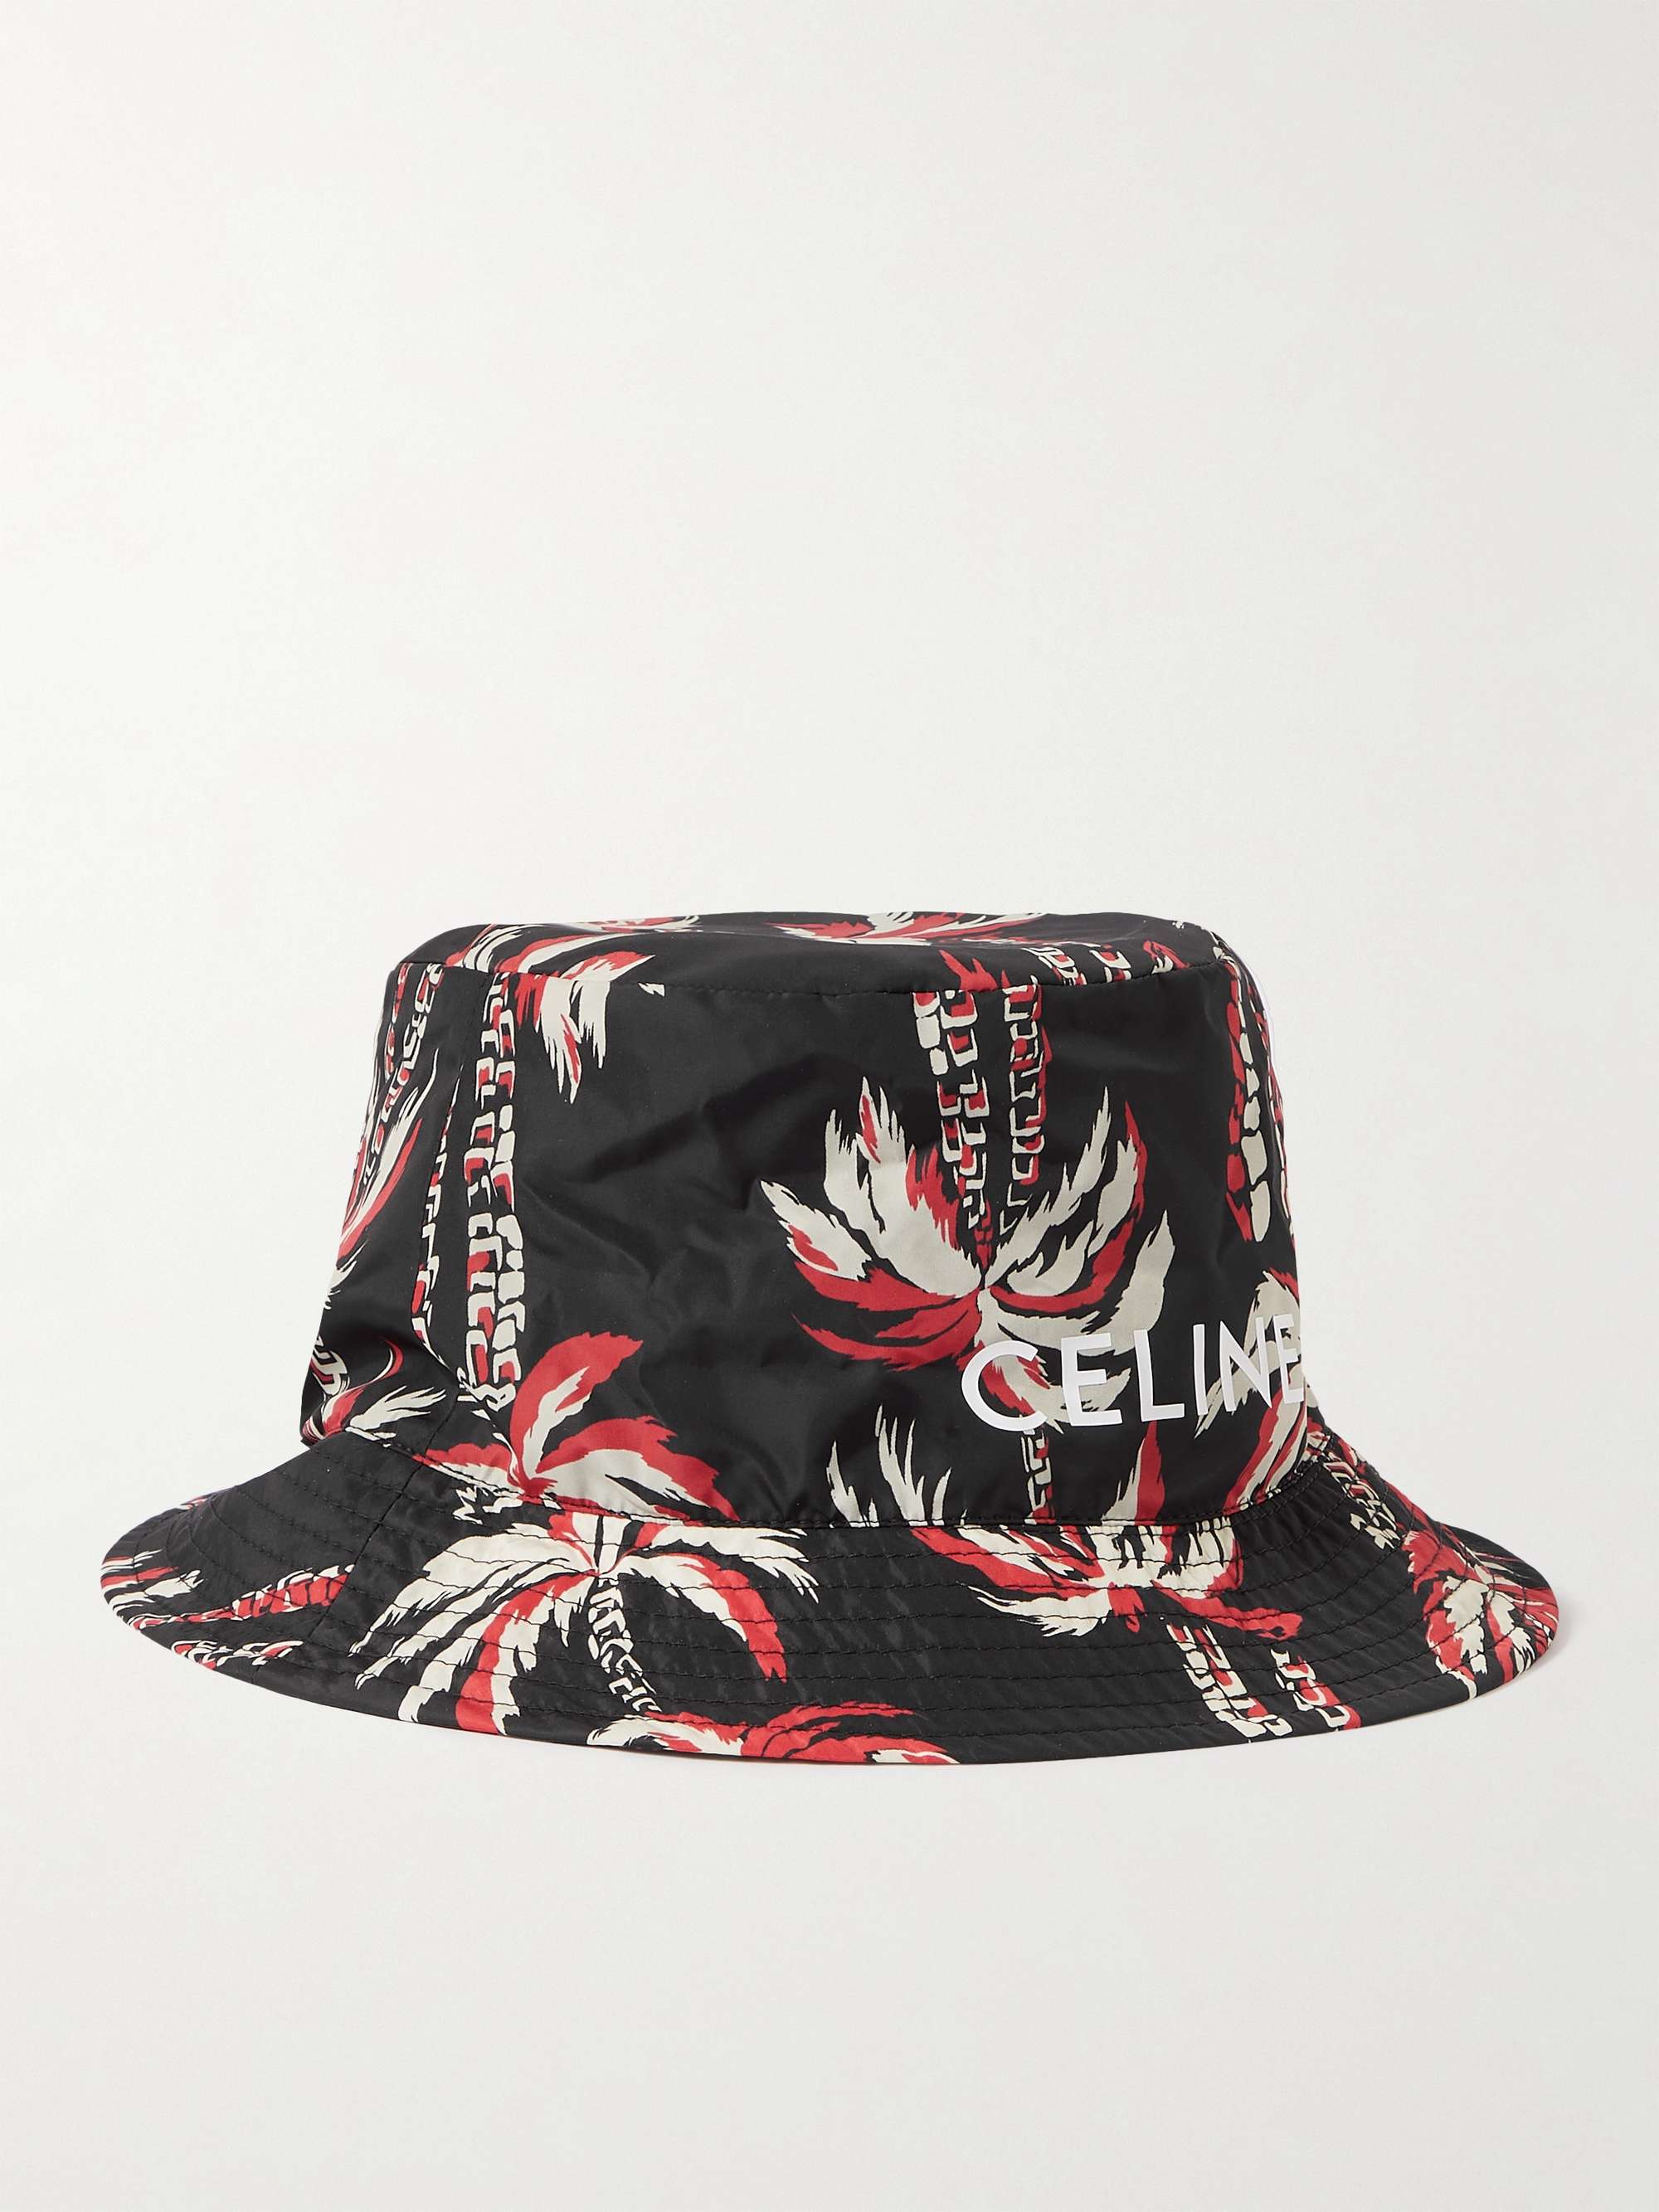 CELINE HOMME Printed Shell Bucket Hat